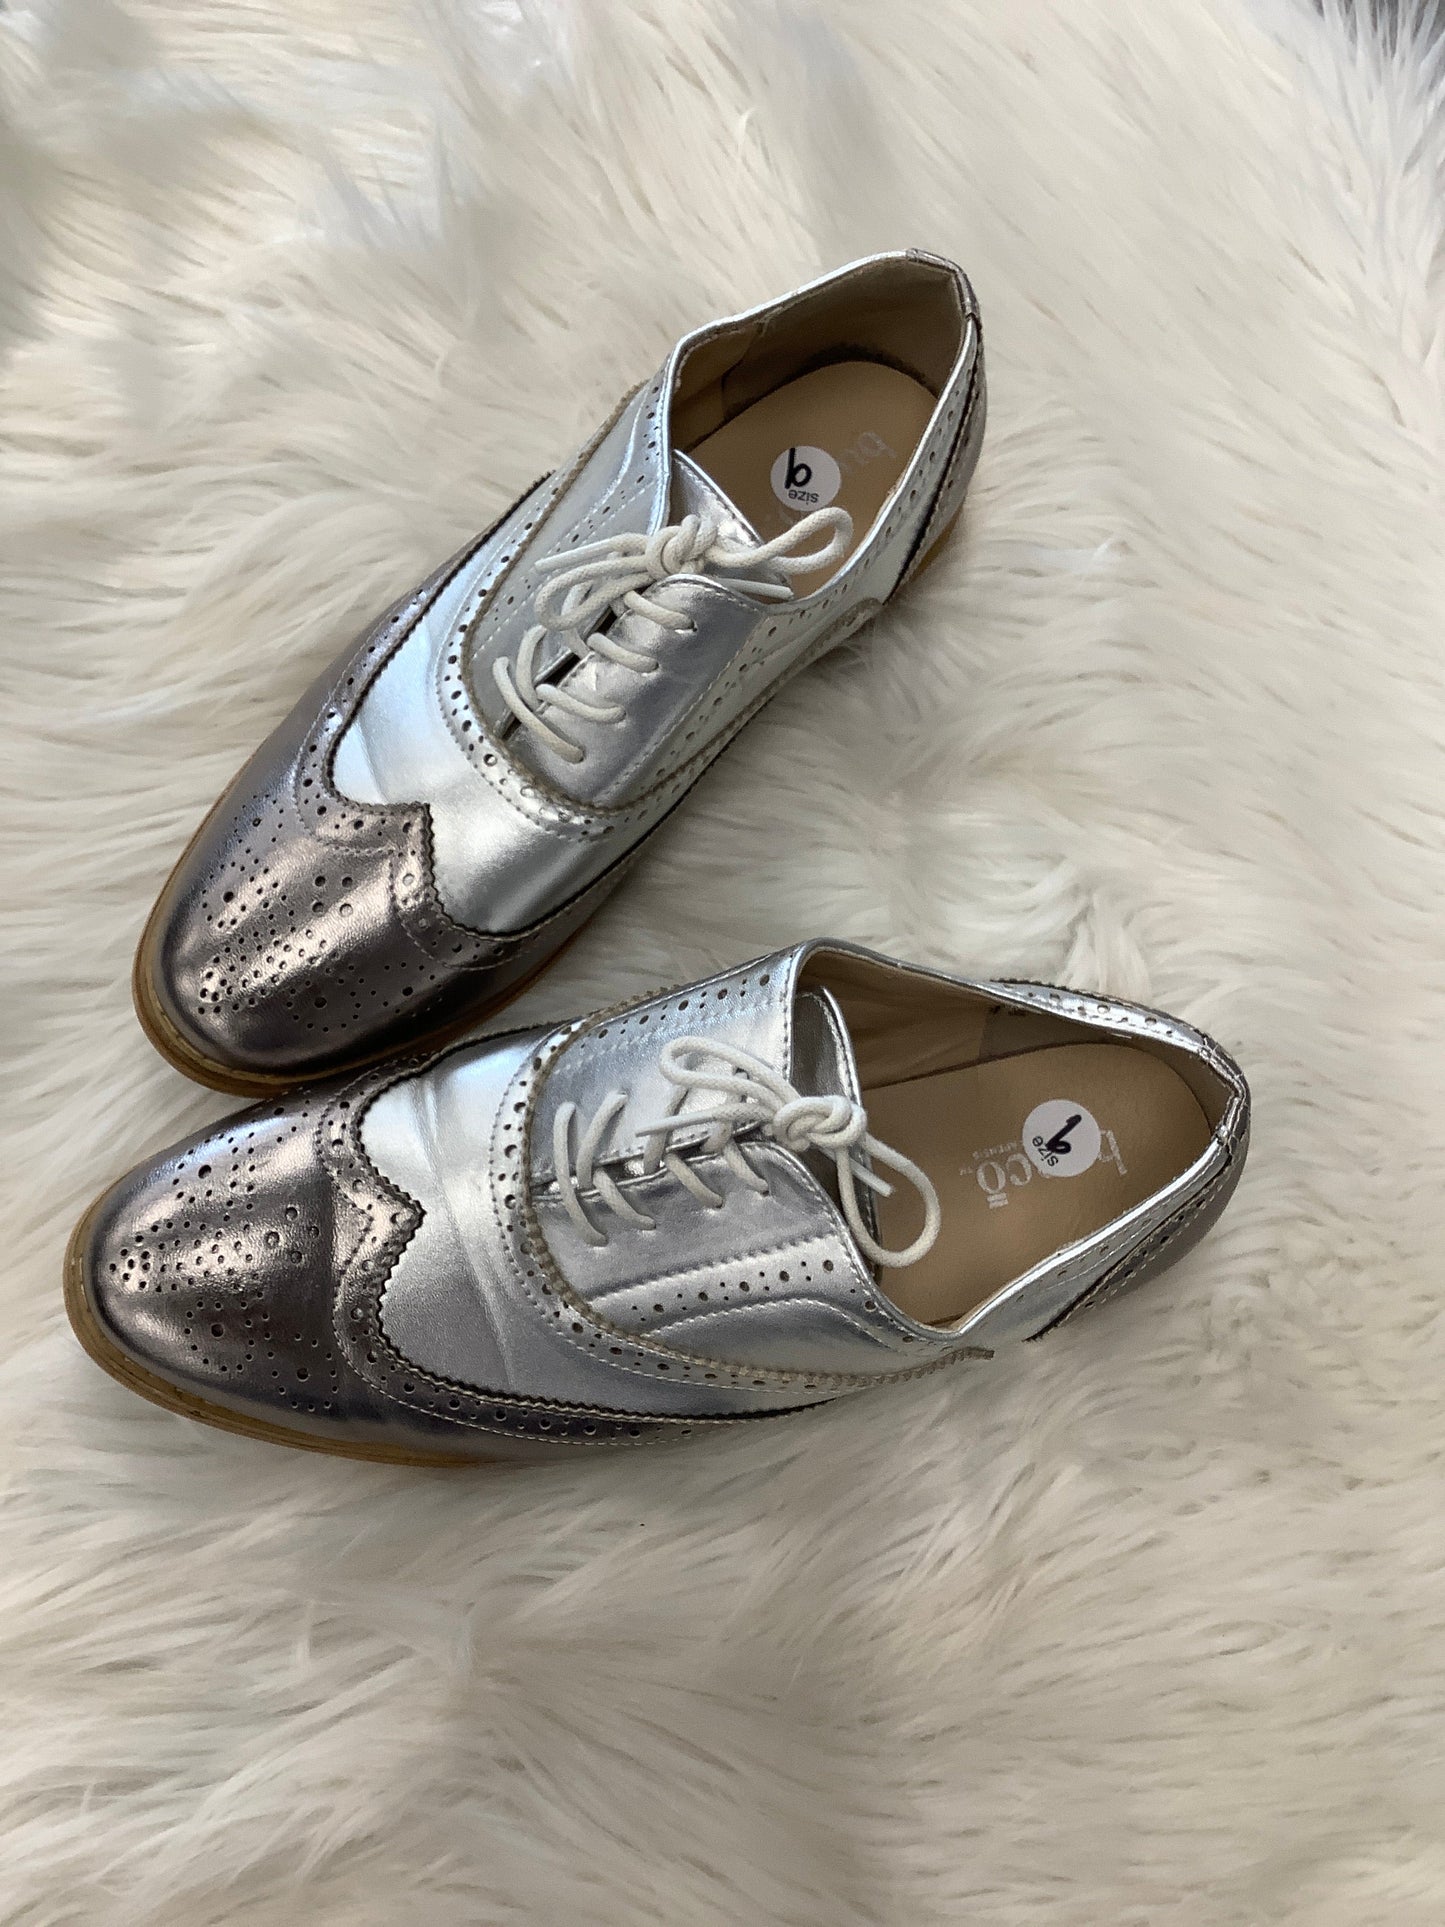 Silver Shoes Flats Bucco, Size 9